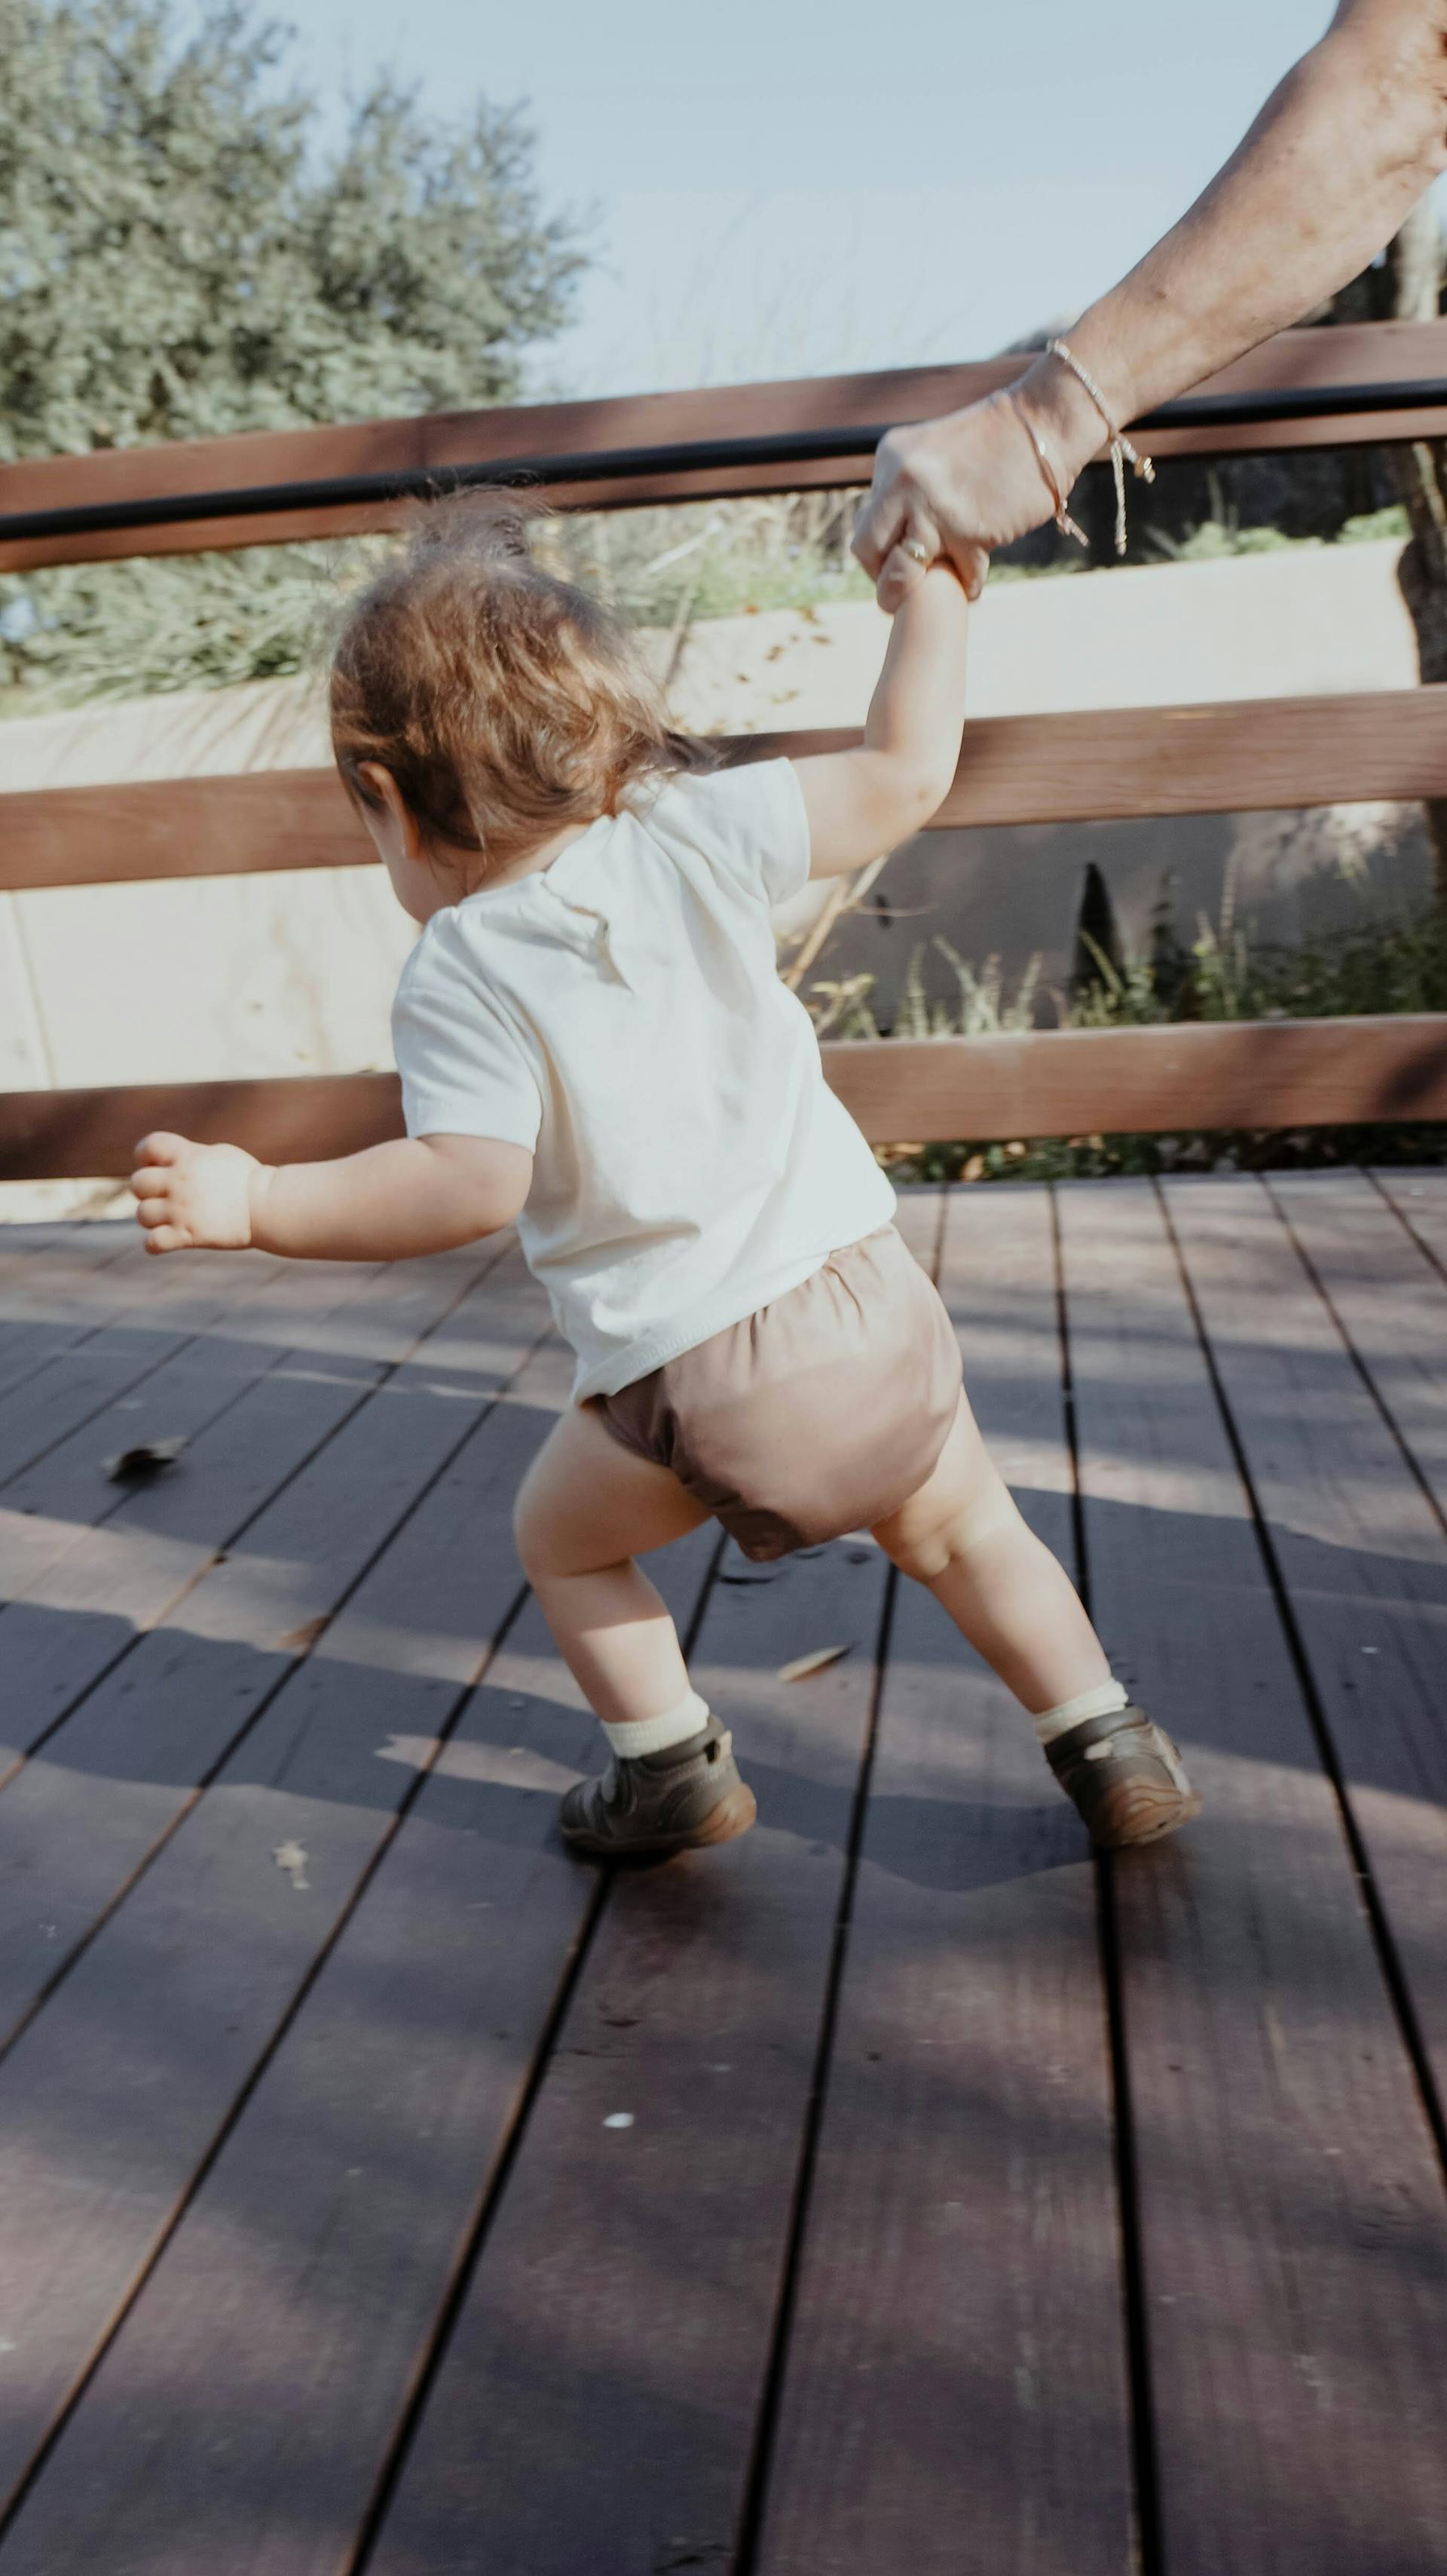 A baby walking | Source: Pexels